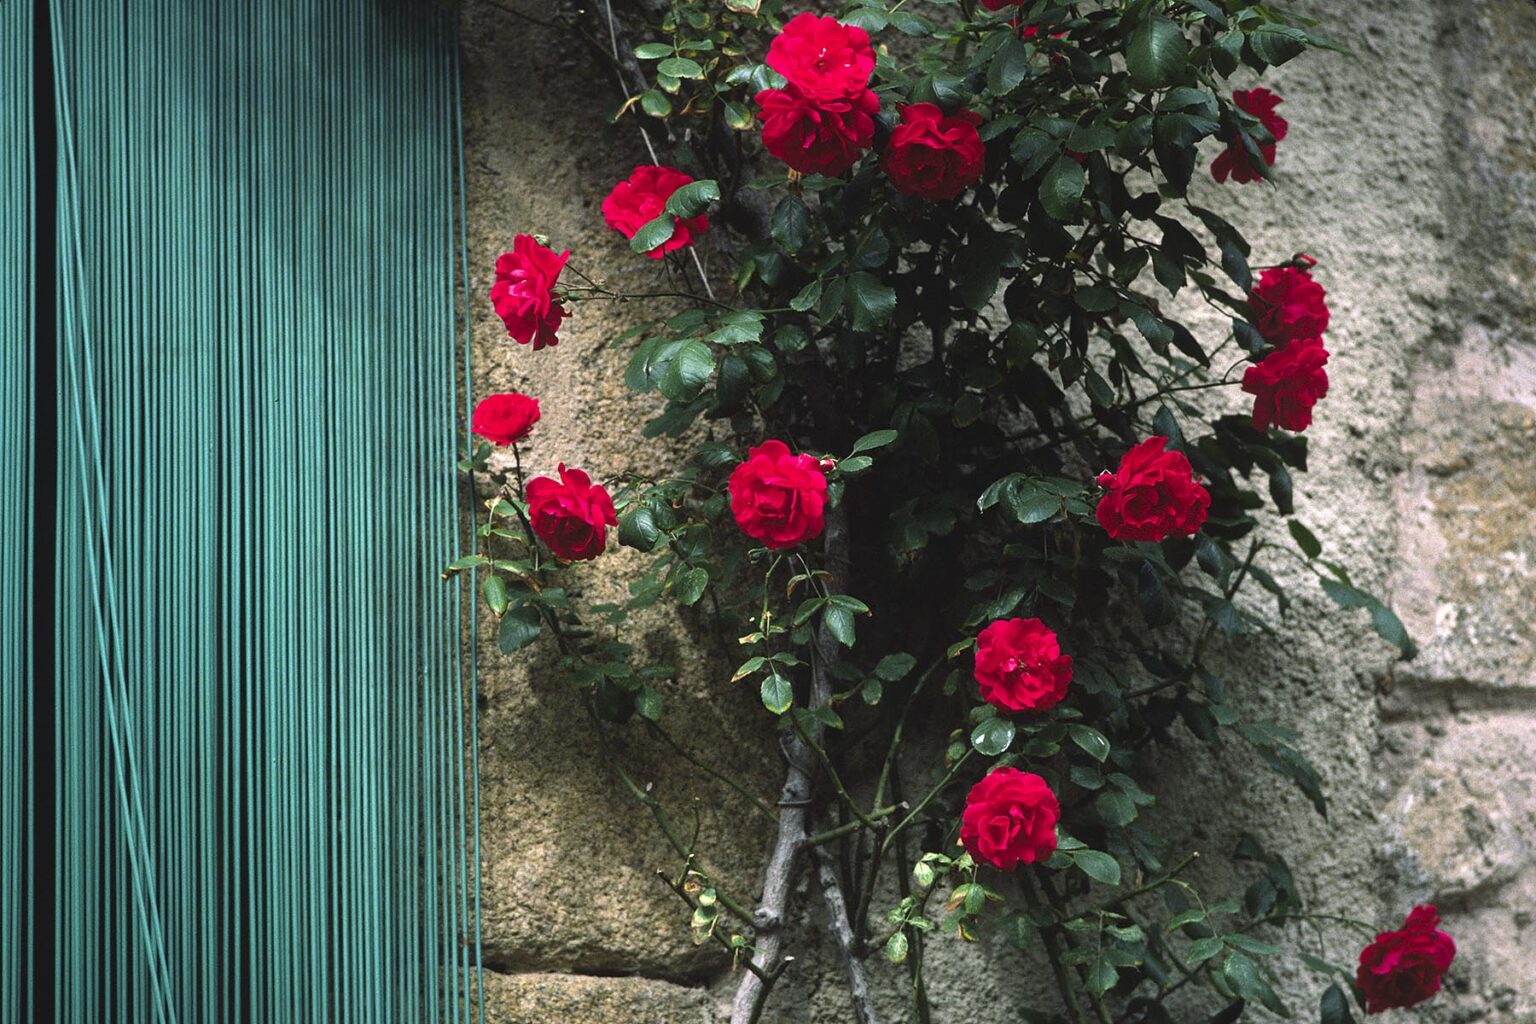 RED ROSE BUSH with GREEN BEADED DOORWAY - COSTA BRAVA, SPAIN